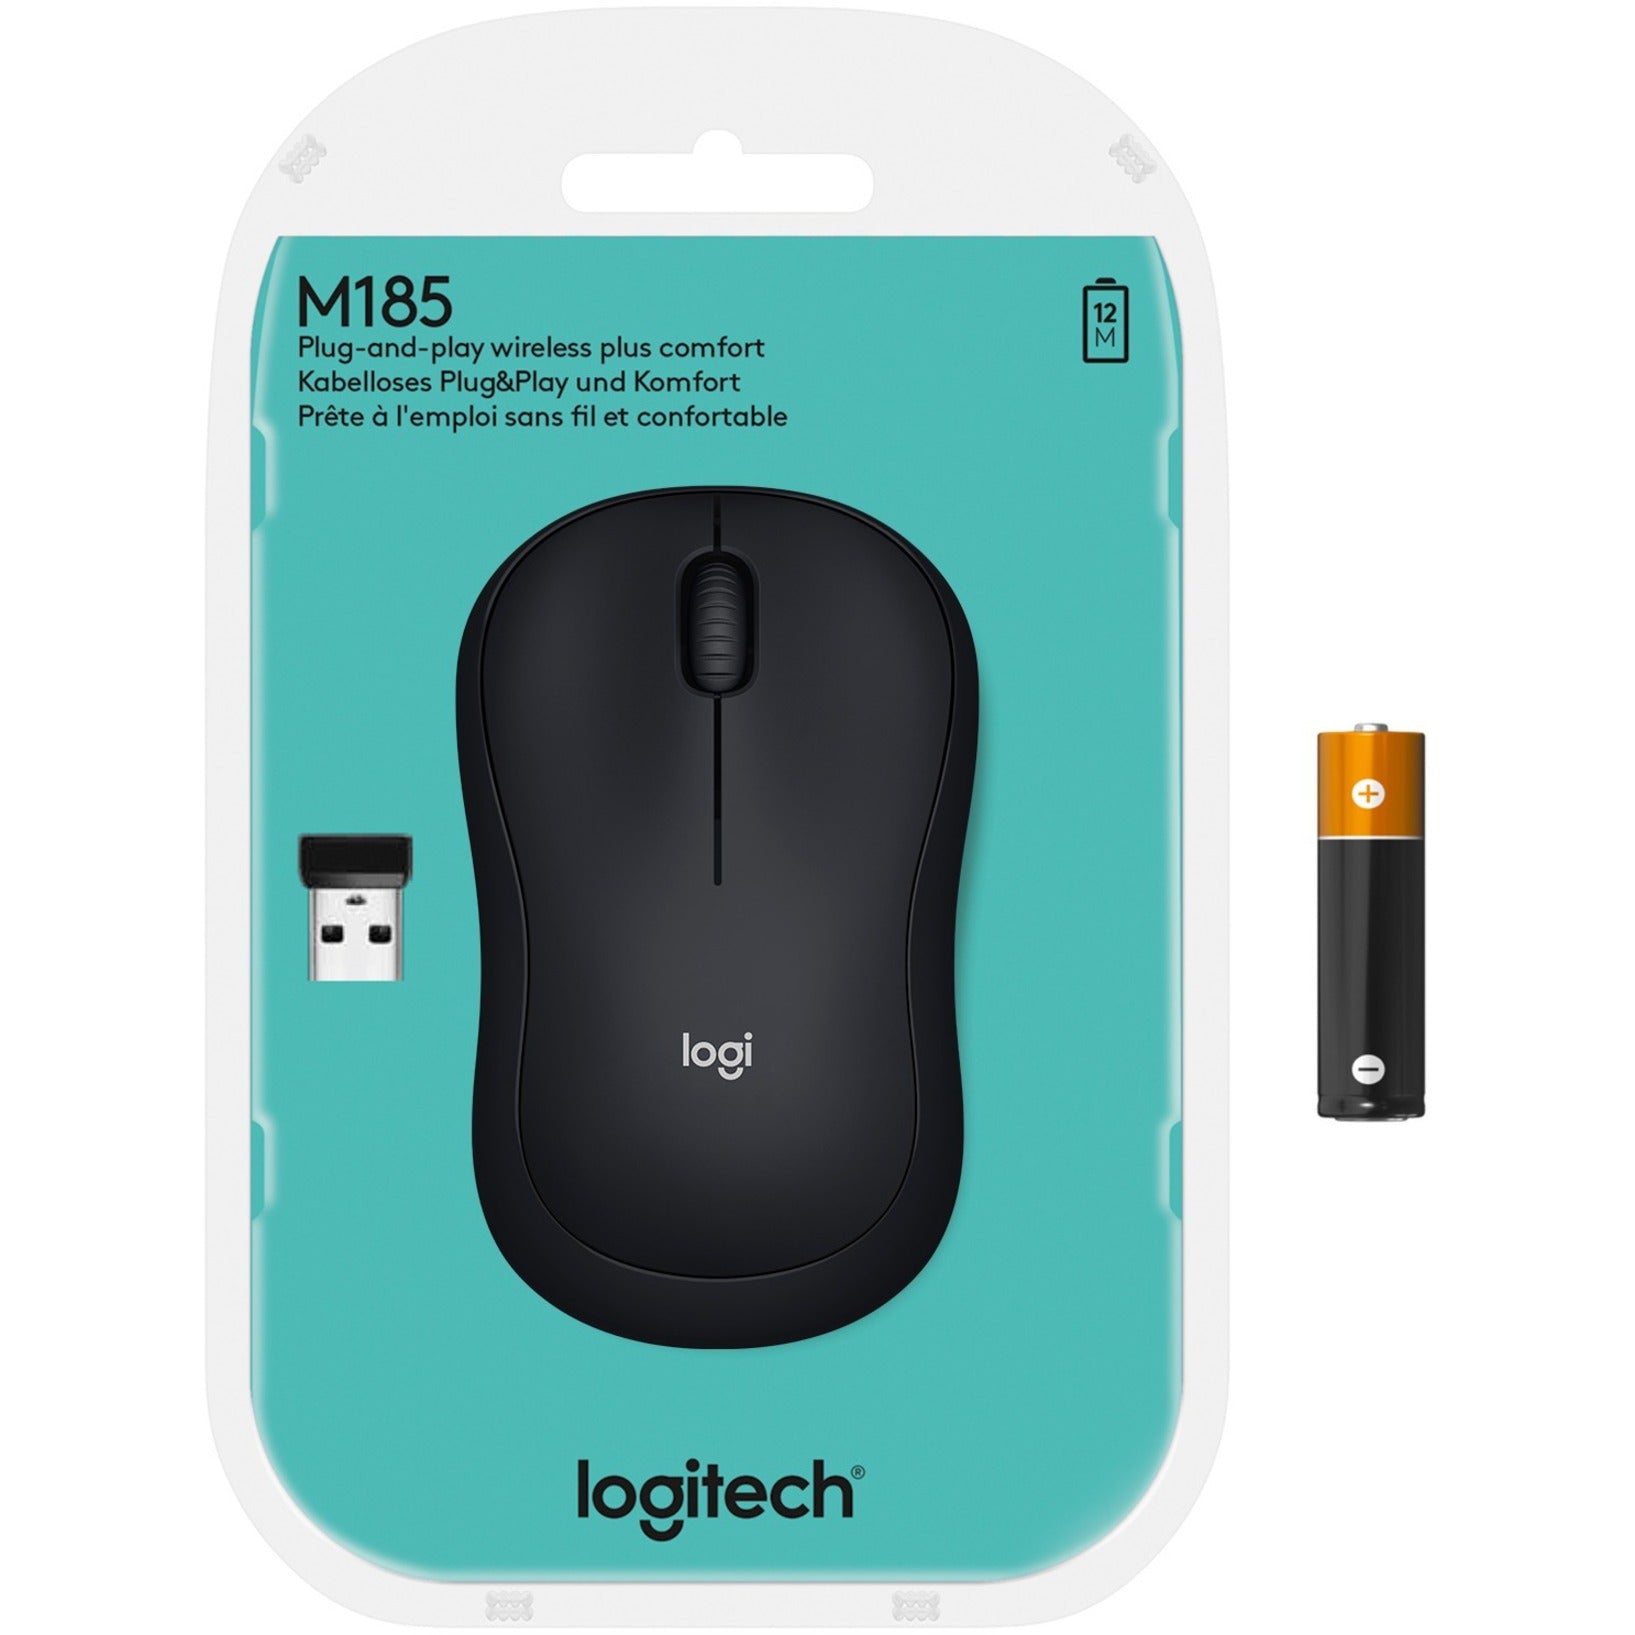 Logitech 910-003888 M185 Wireless Mouse, 3 Year Limited Warranty, Symmetrical Ergonomic Fit, 1000 dpi Optical, 2.4 GHz Wireless